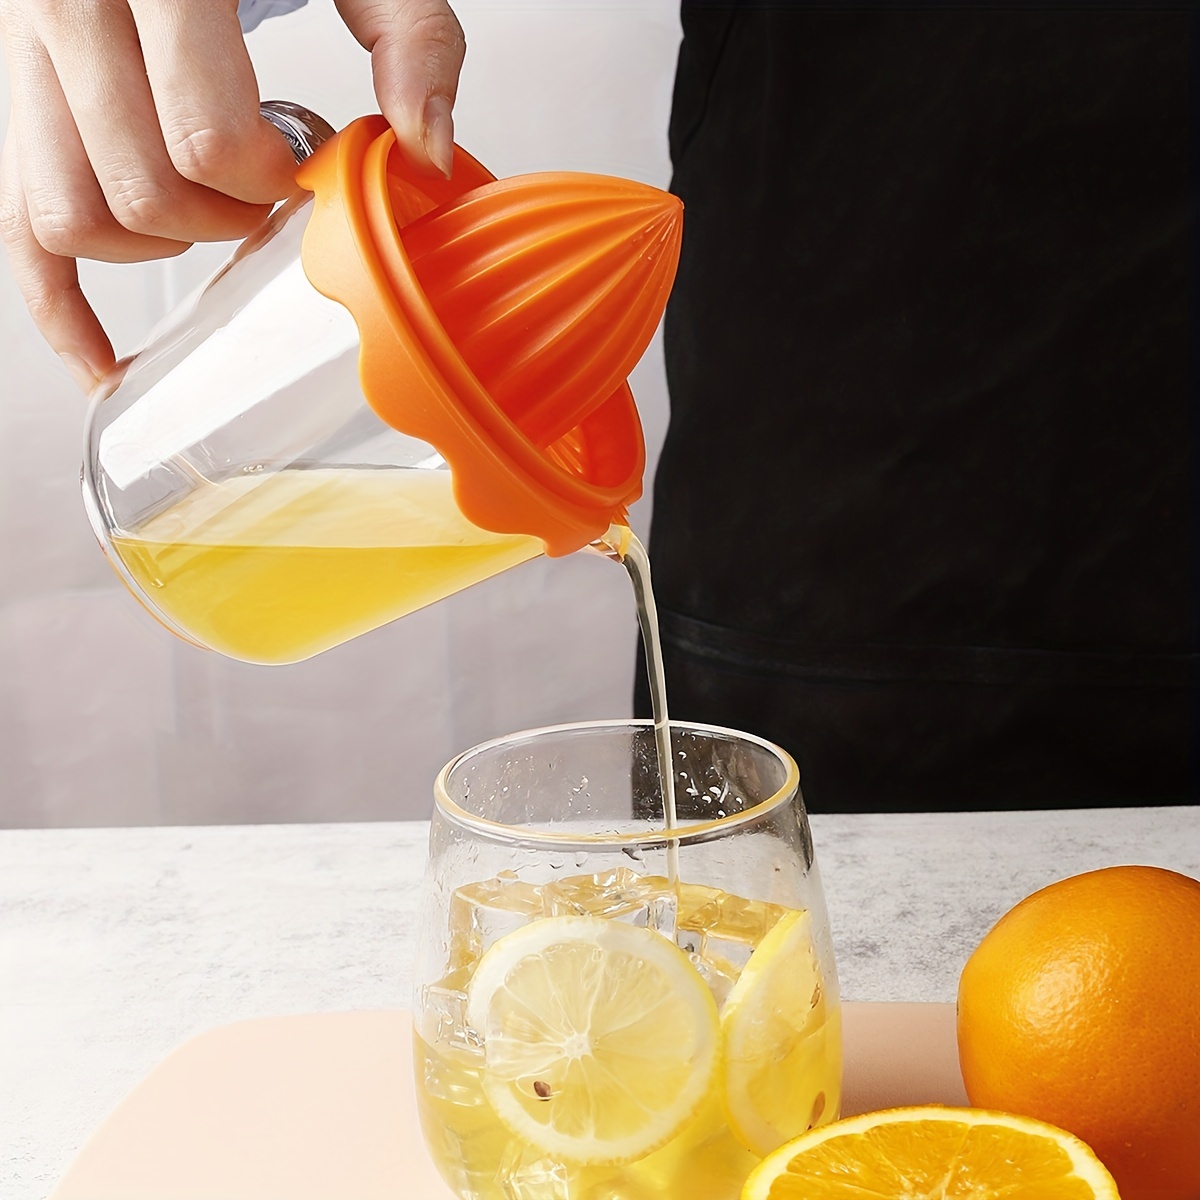 Exprimidor de Naranjas Manual 22 Naranjas por Minuto 460x340x780h mm  EASY-PRO MIZUMO ⭐Oferta 1.151,92 € ⭐